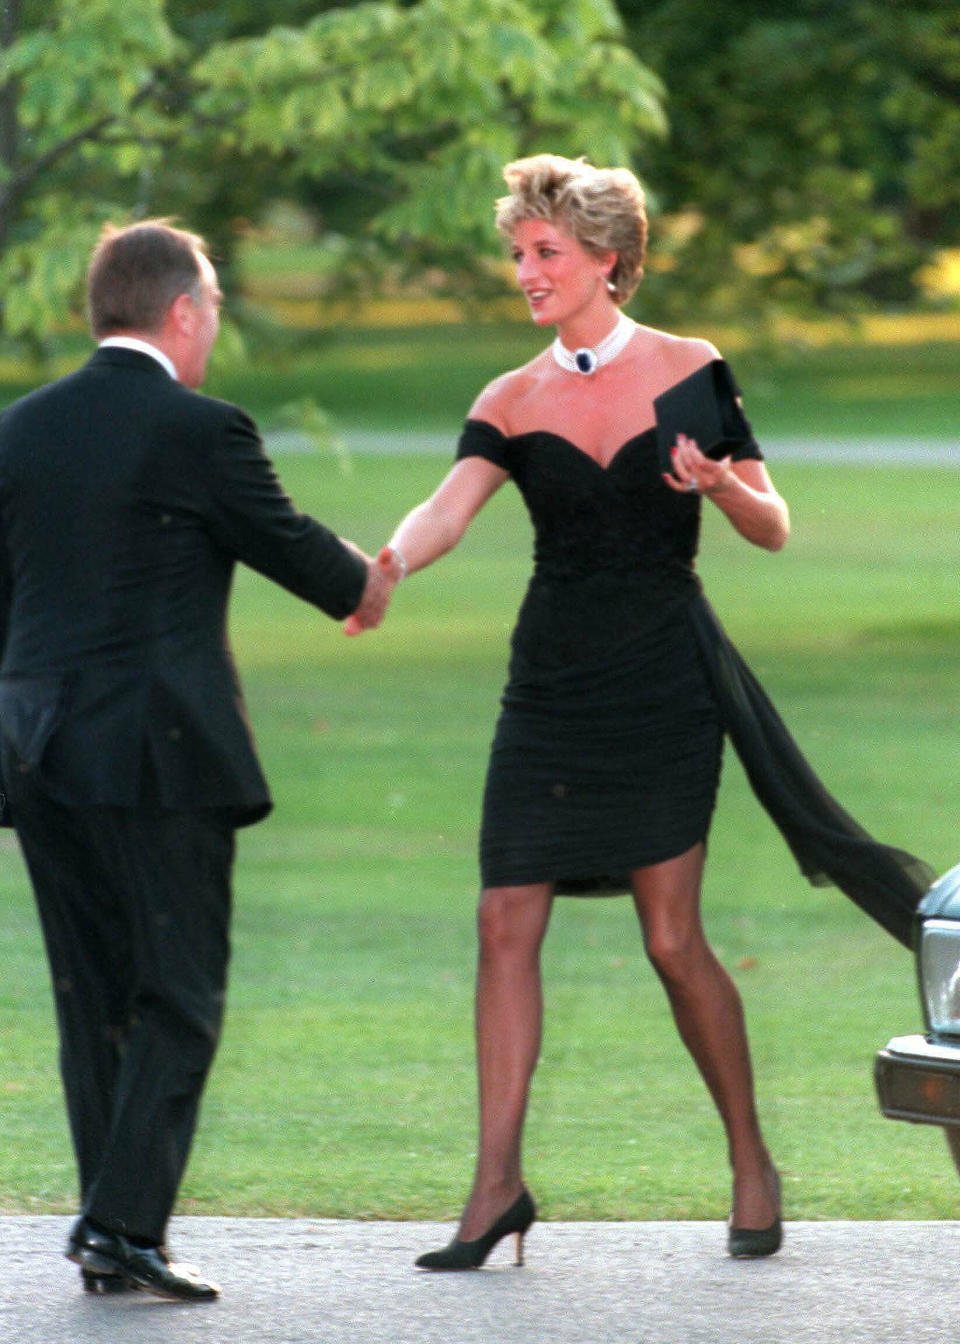 Princess Diana wearing a stunning off-the-shoulder short black dress and high heels.